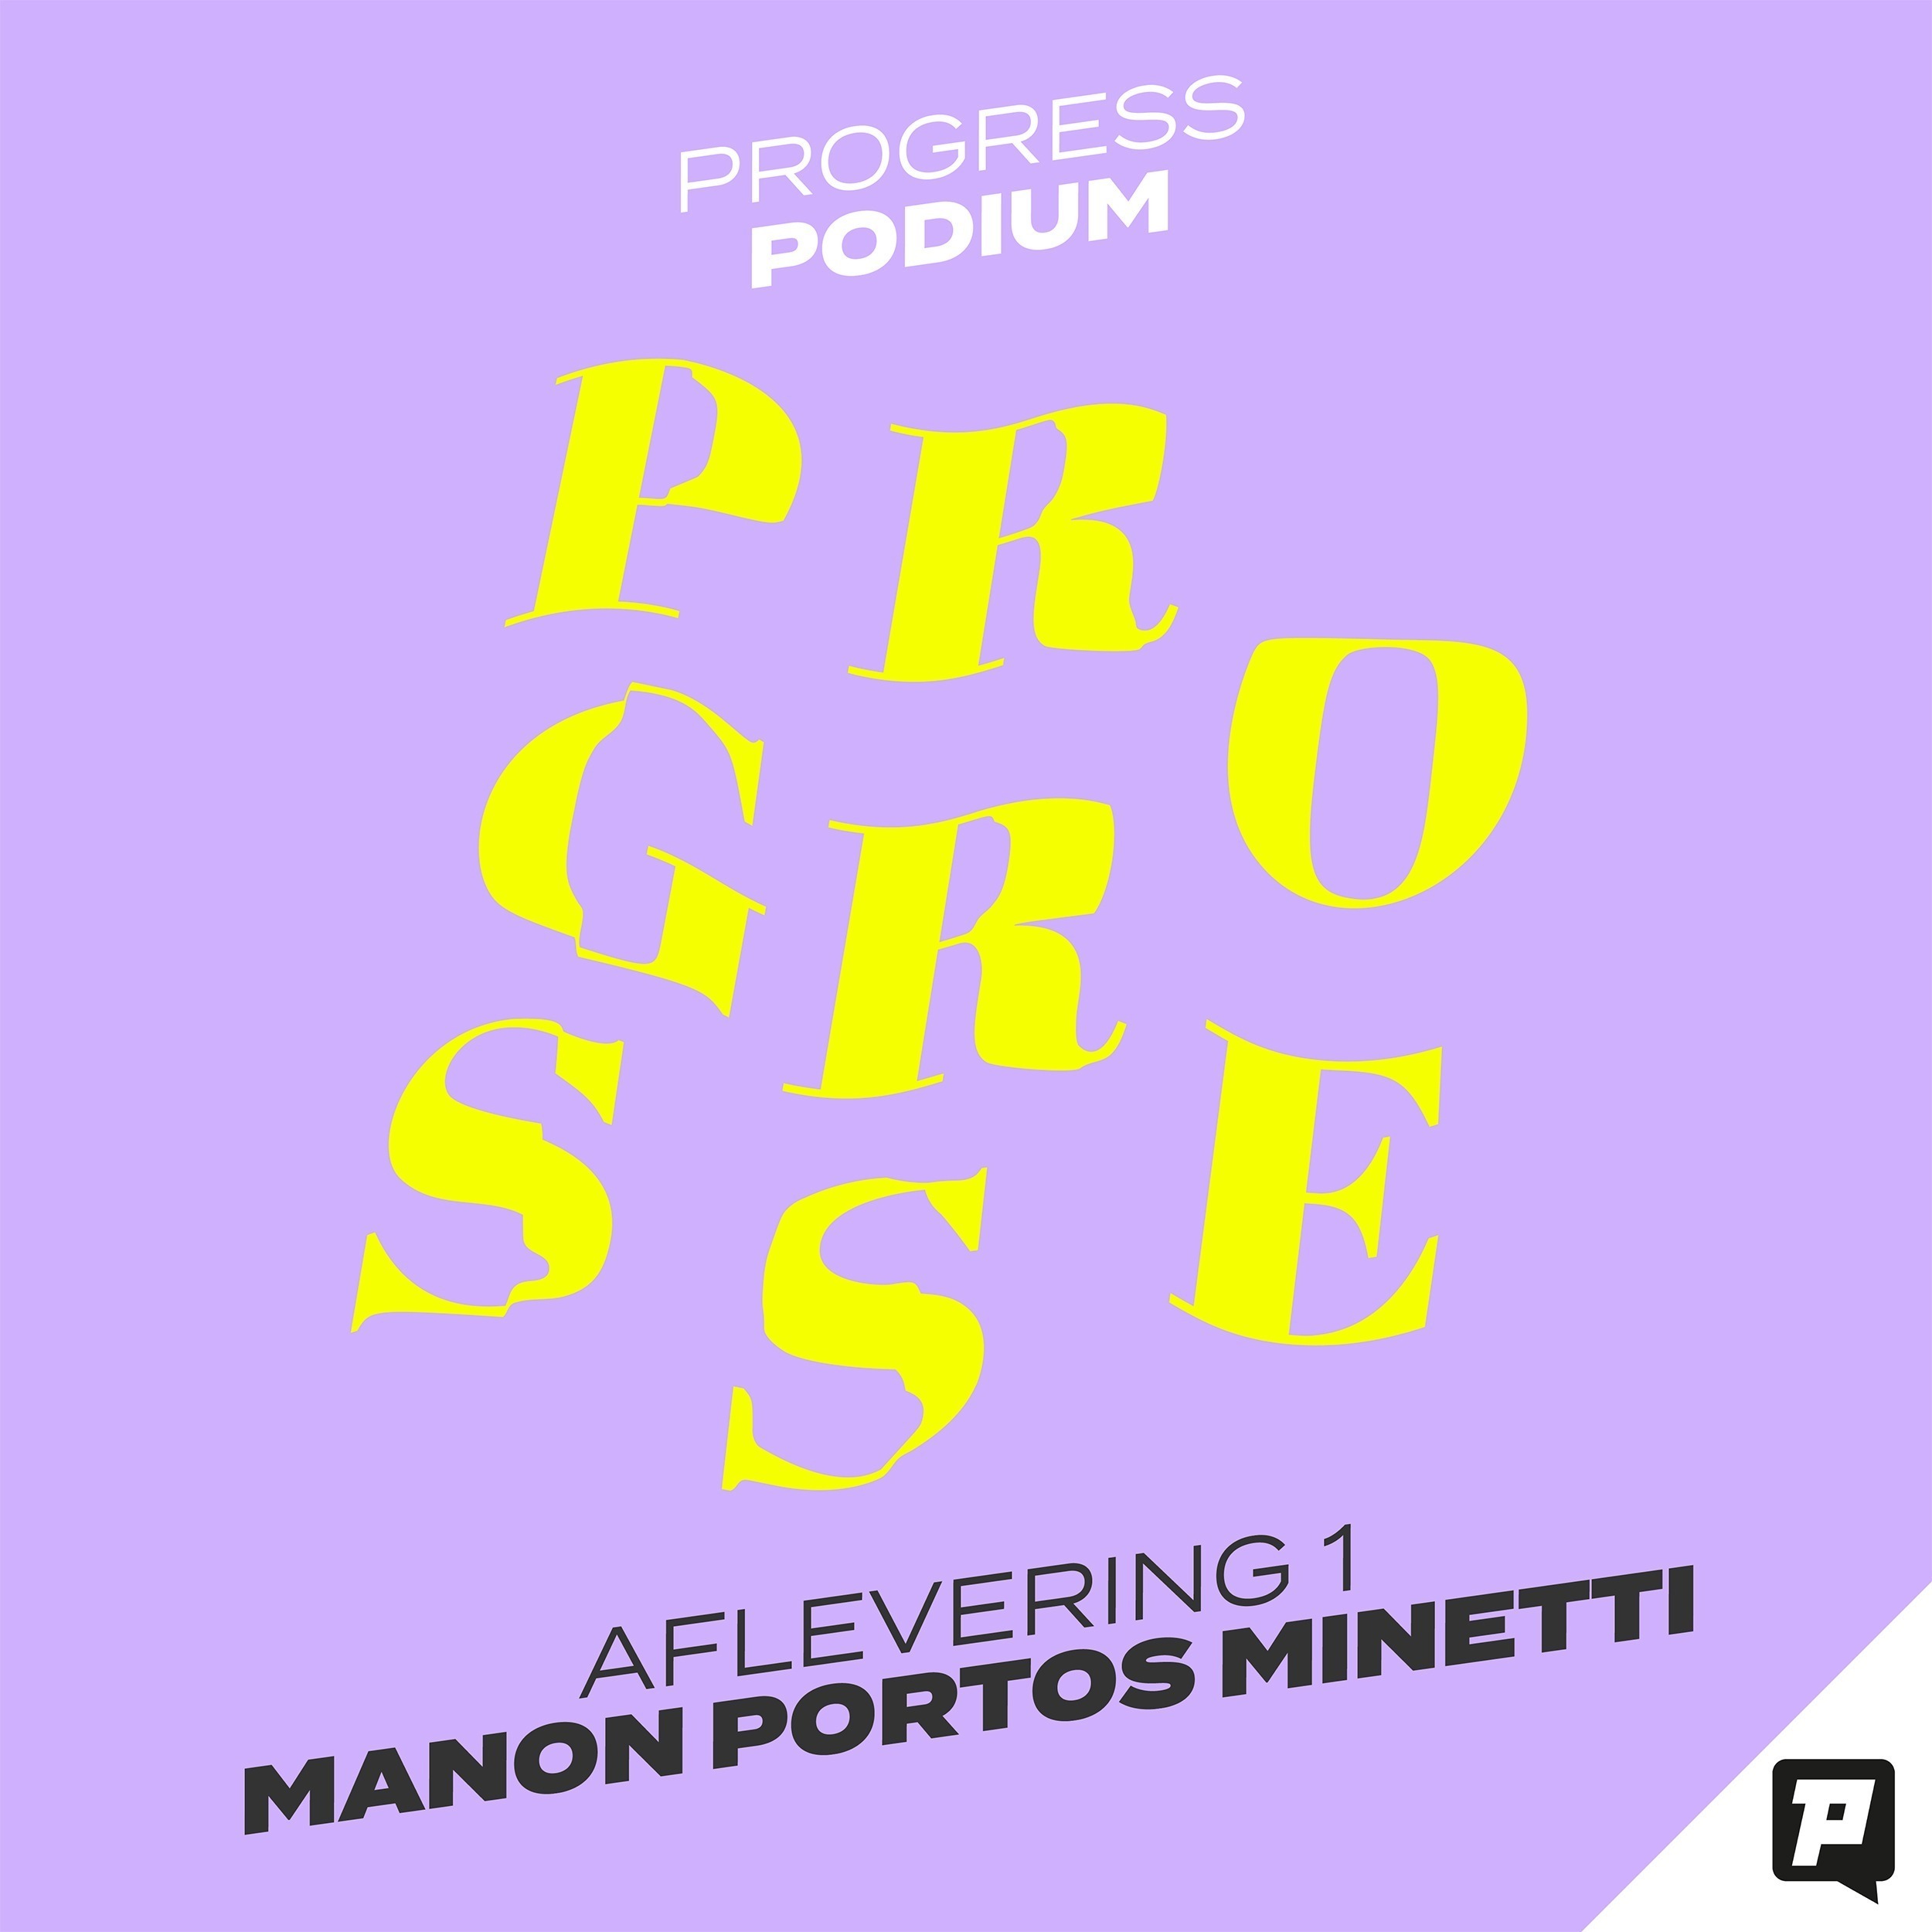 #1 Manon Portos Minetti (pilotaflevering)